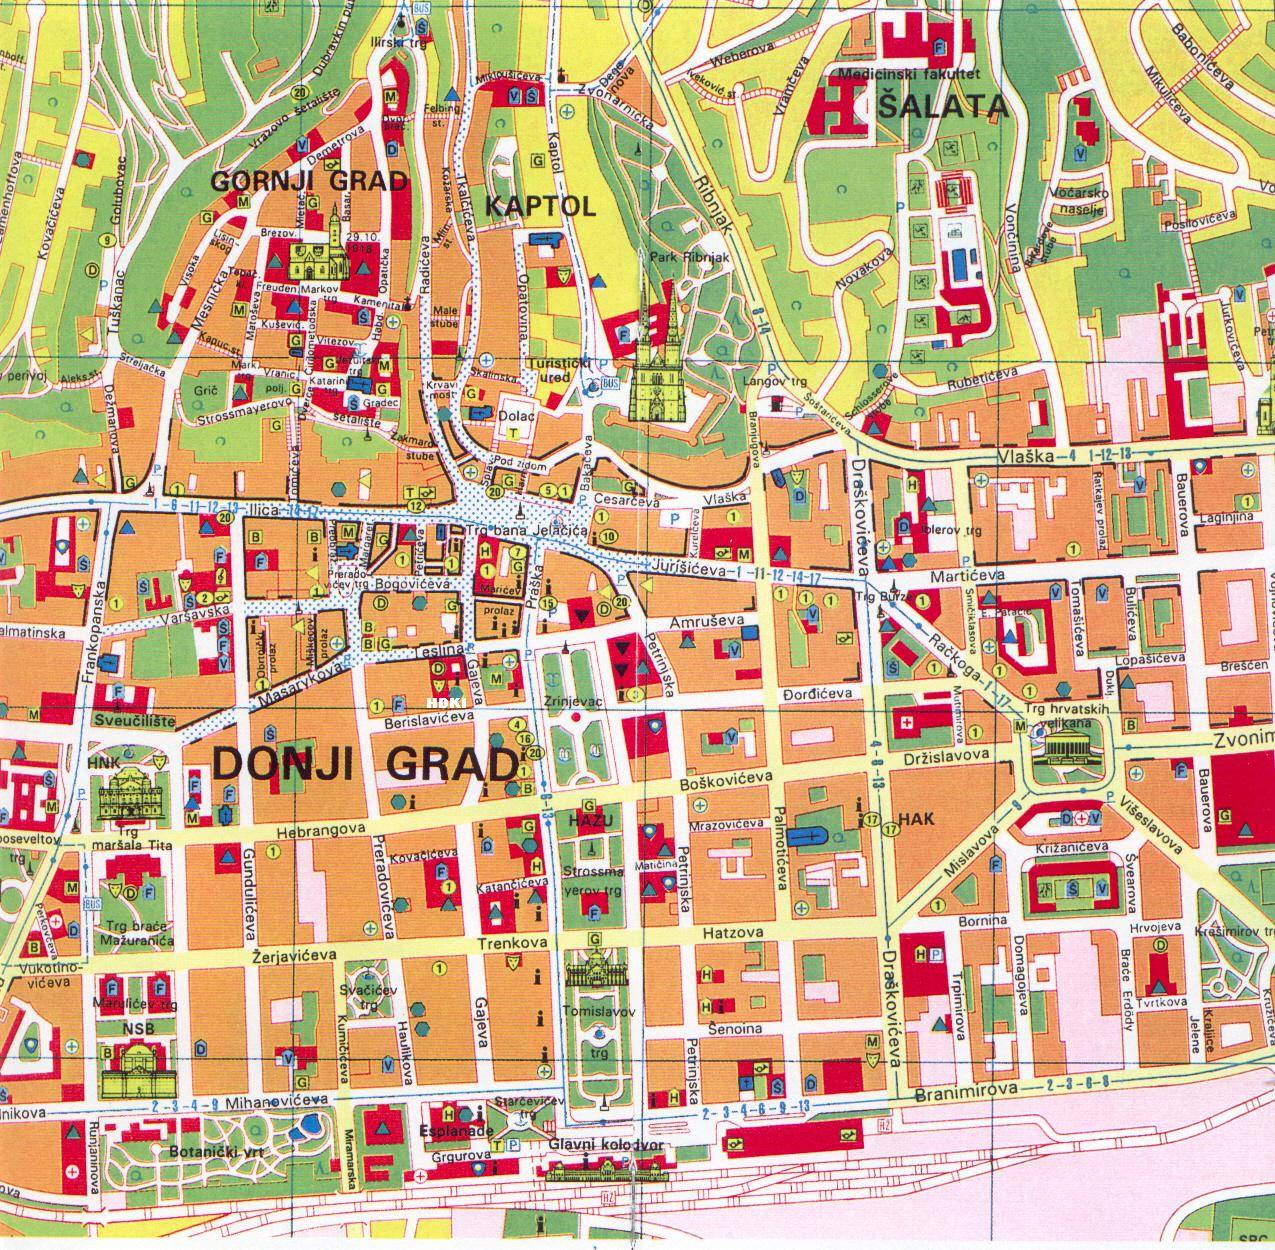 karta zagreba download Large Zagreb Maps for Free Download and Print | High Resolution  karta zagreba download